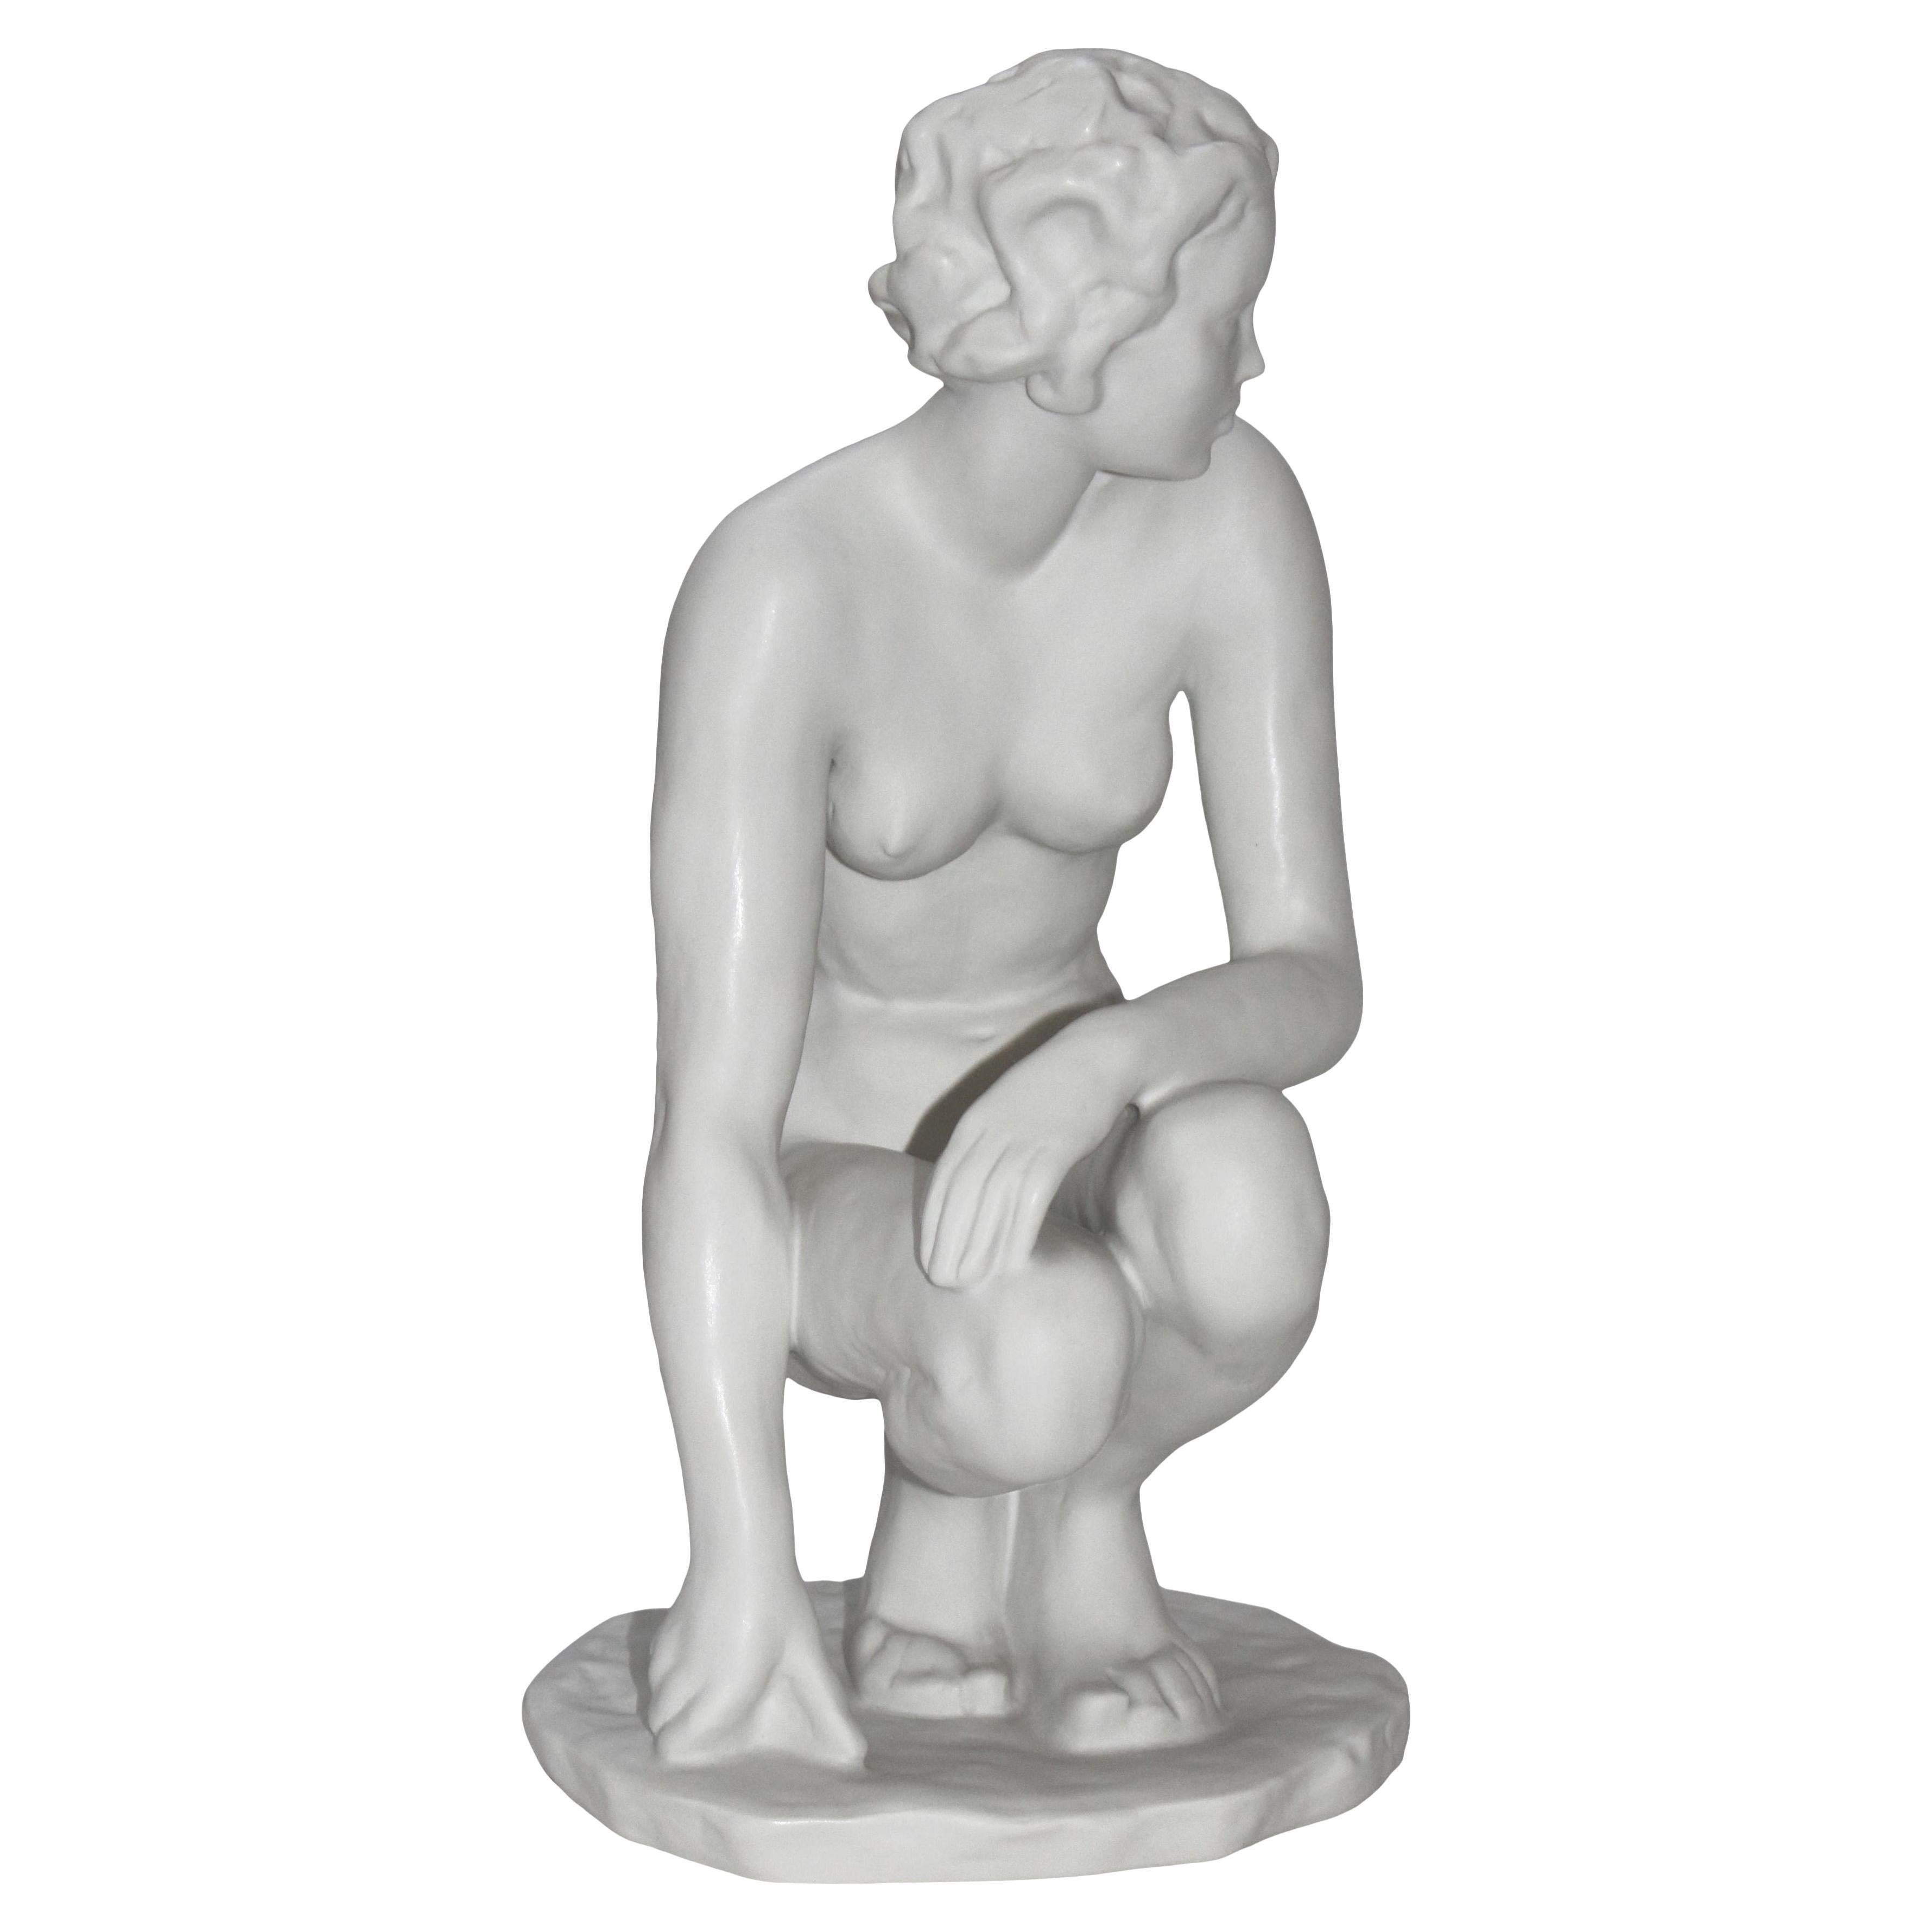 Roenthal Figure of a Nude Female "Die Hockende" For Sale